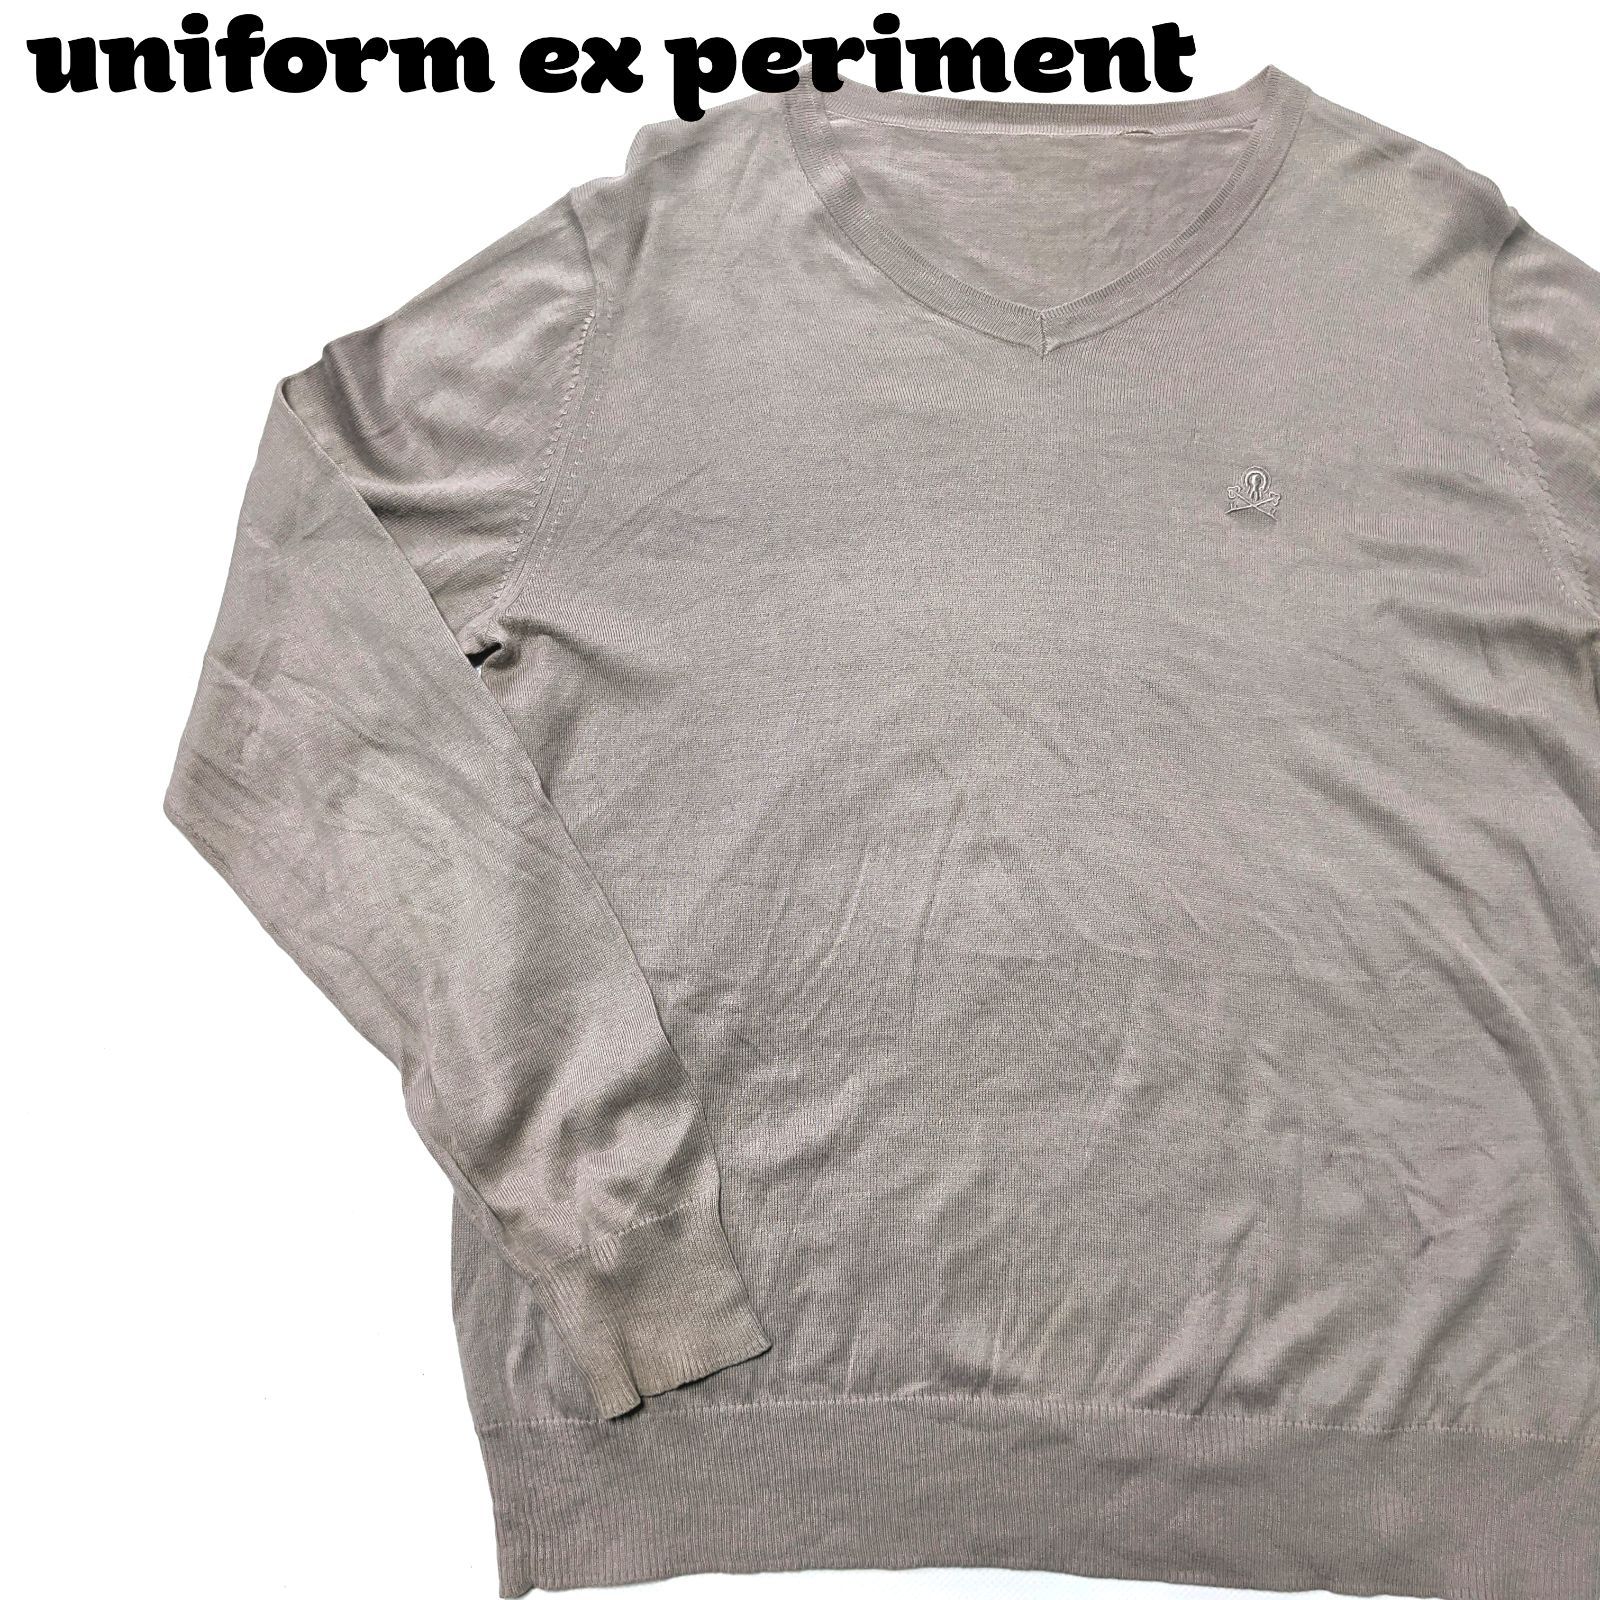 uniform experiment ニット・セーター -(M位) グレーあり光沢